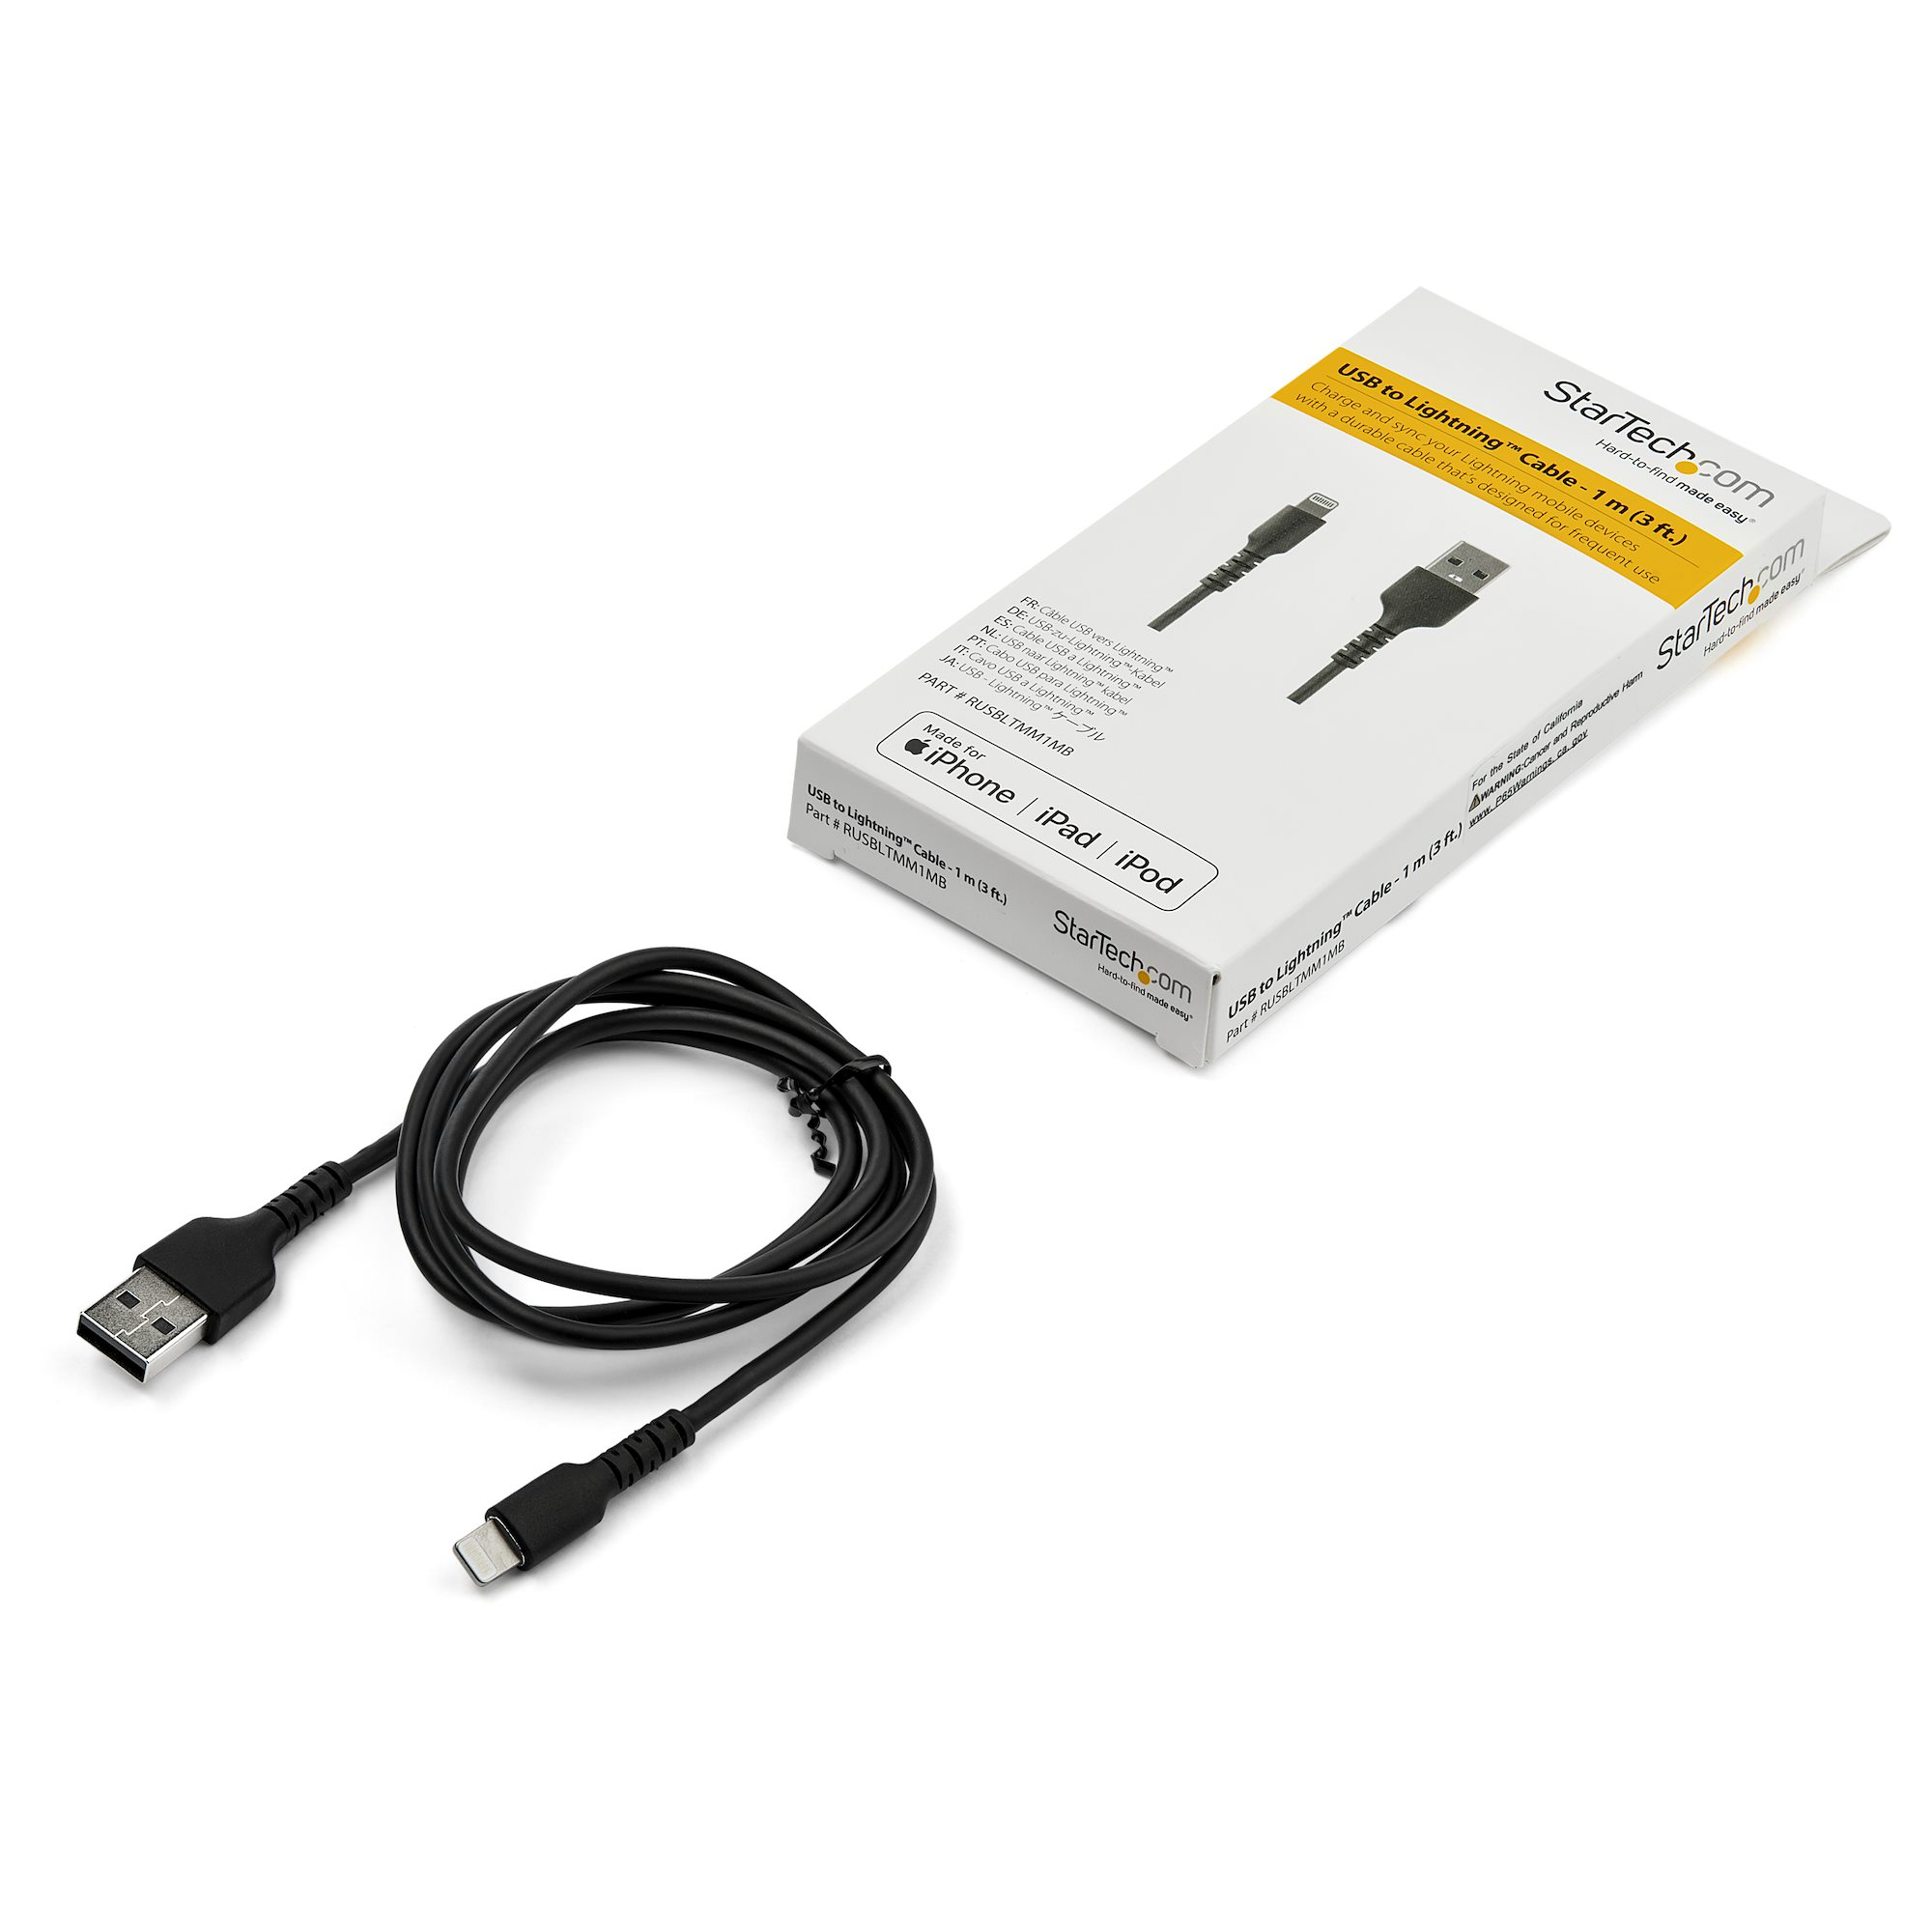 Apple Cable de USB a Lightning (1M) para iPhone.